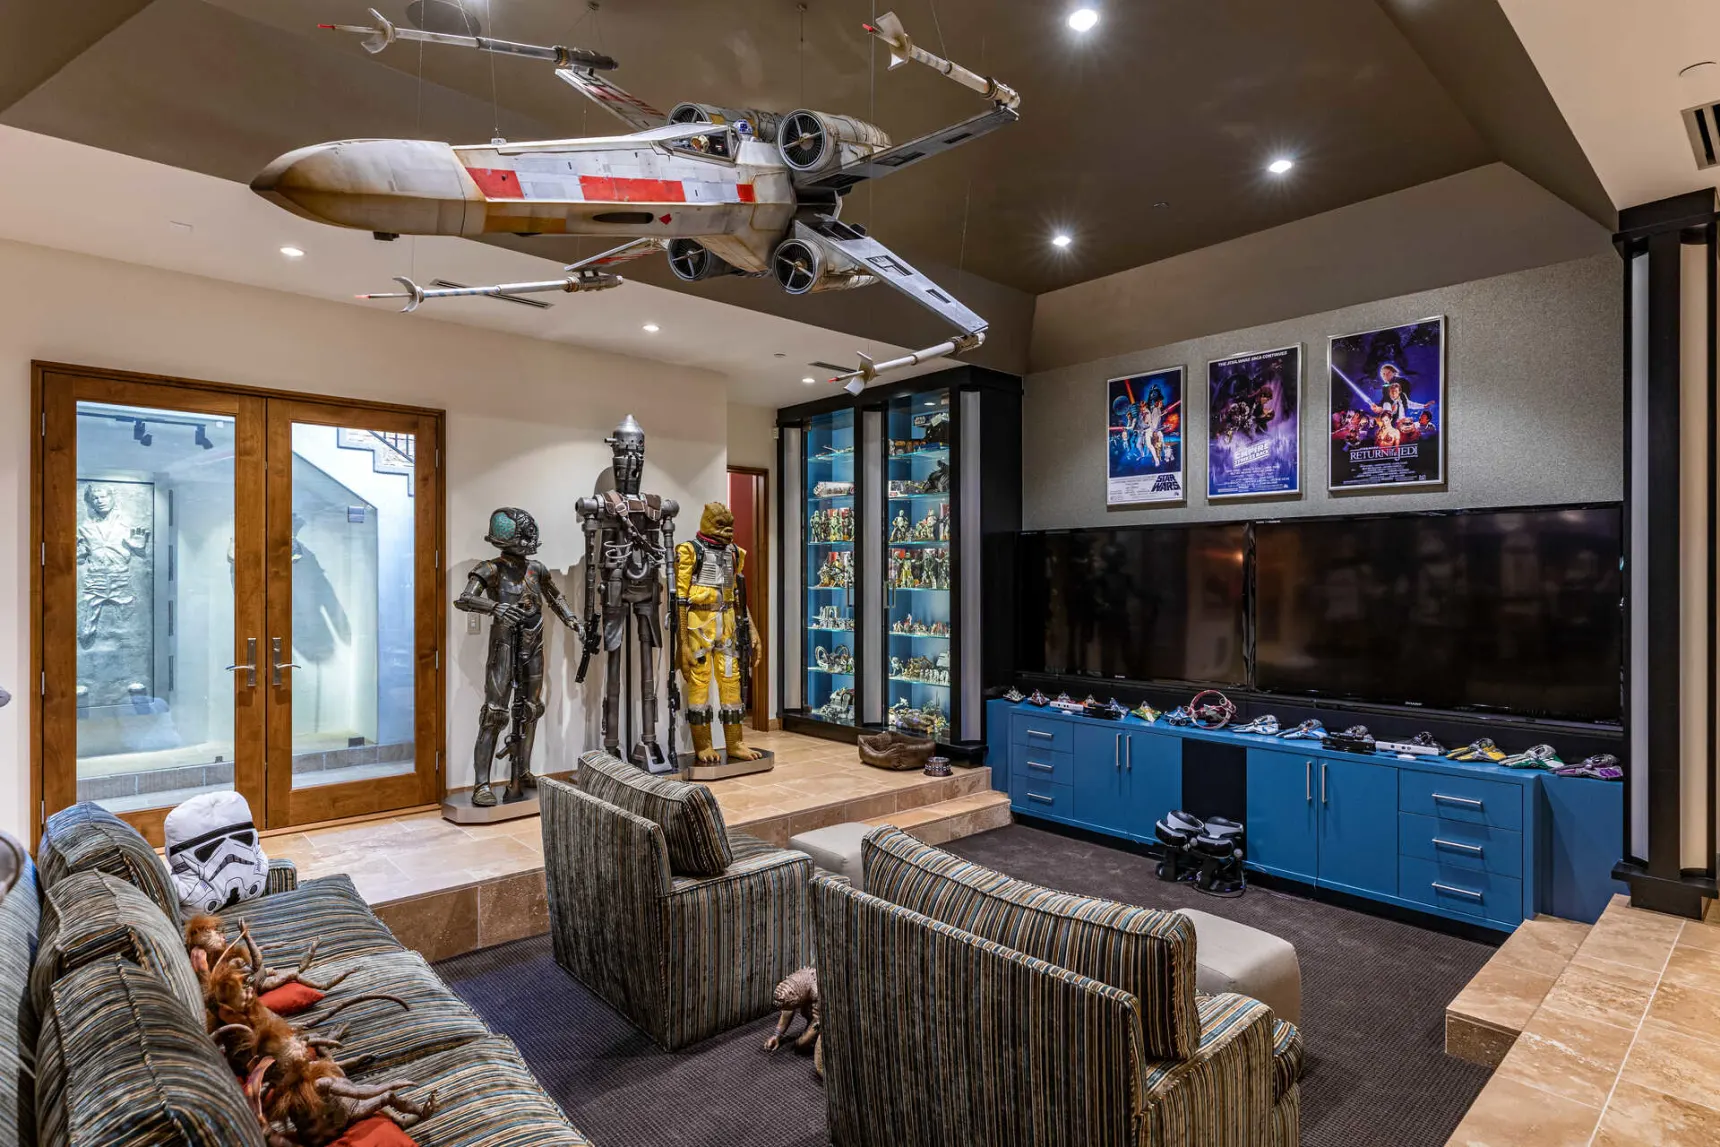 Star Wars Themed Room Ideas - Man Cave Geek